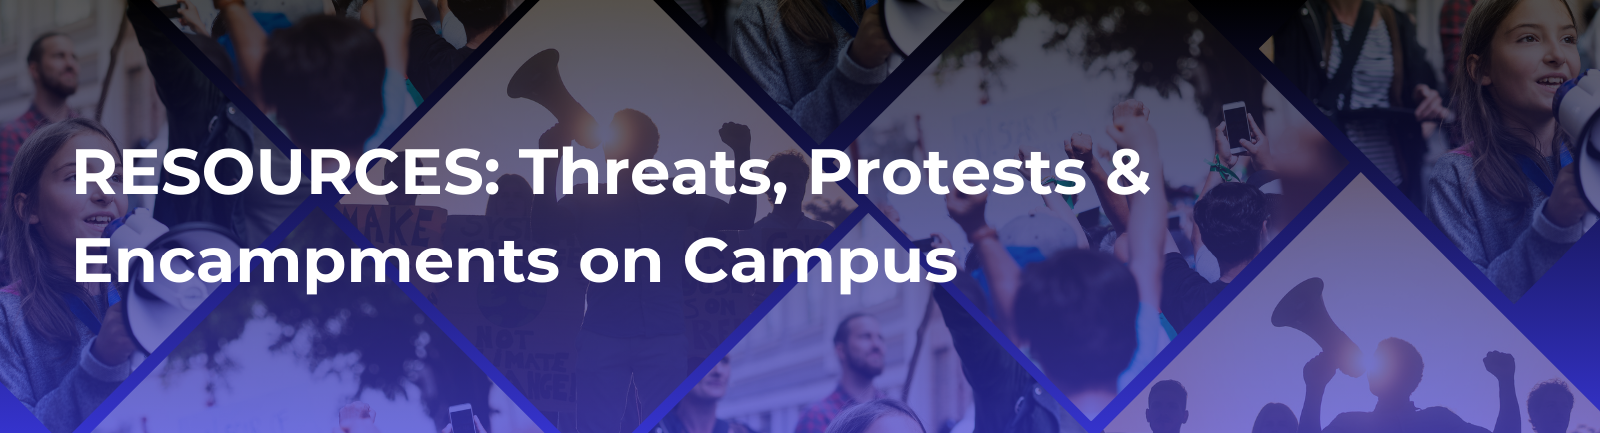 Resources: Threats, Protests, & Encampments